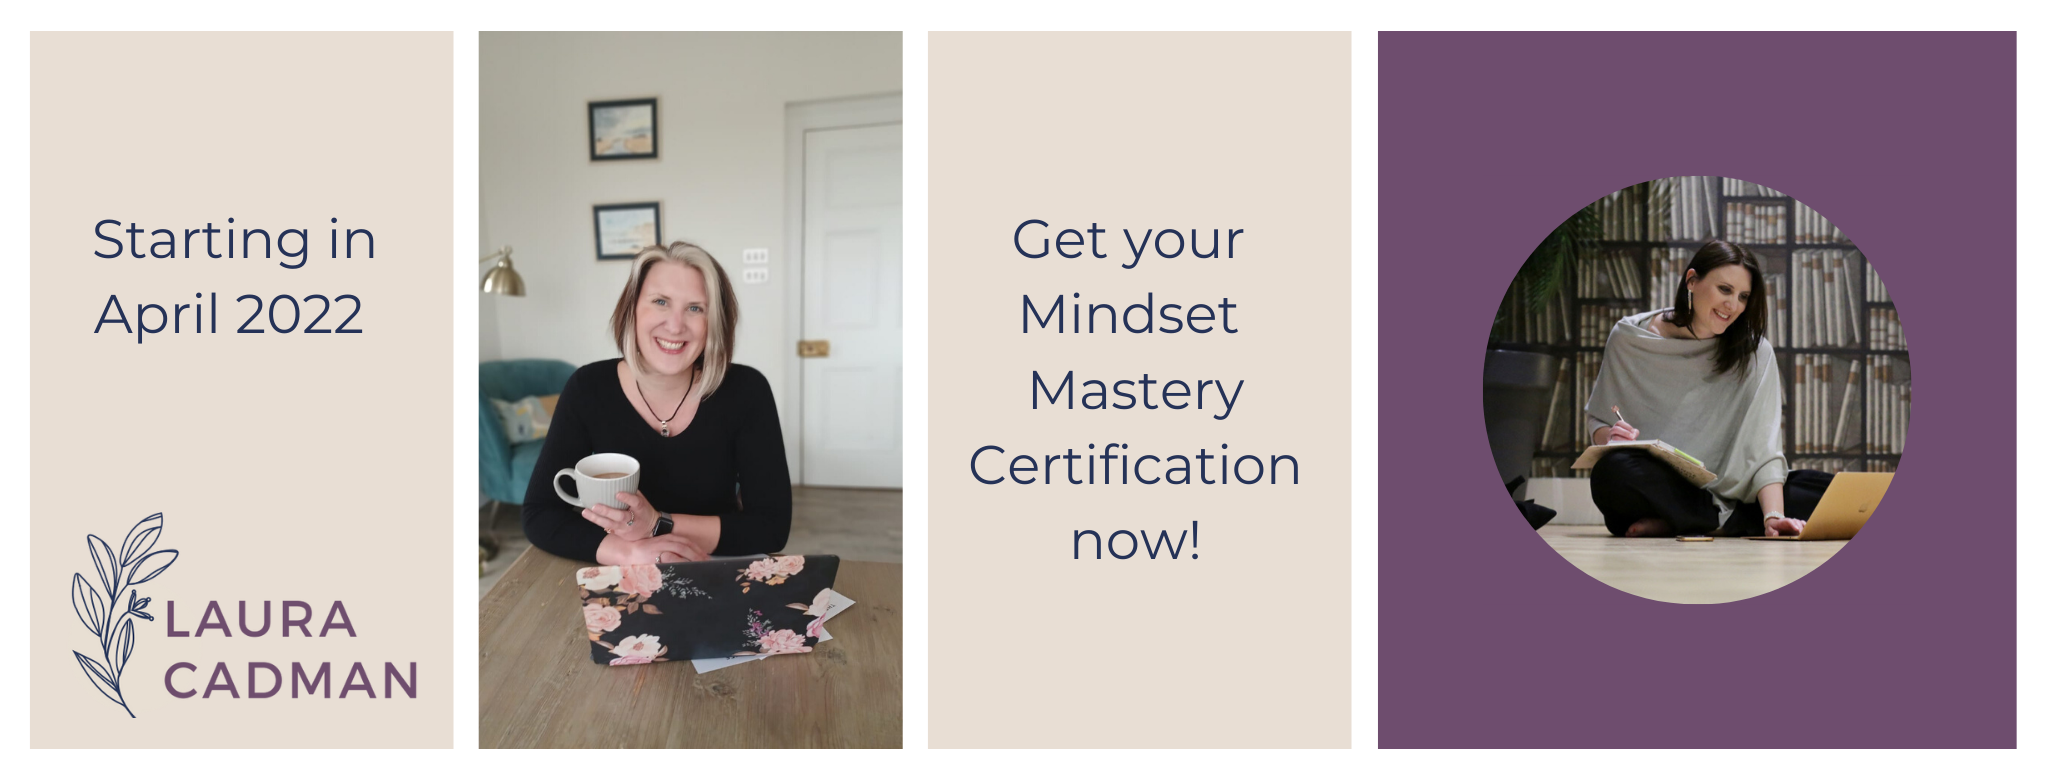 Laura Cadman - Mindset Mastery Certification